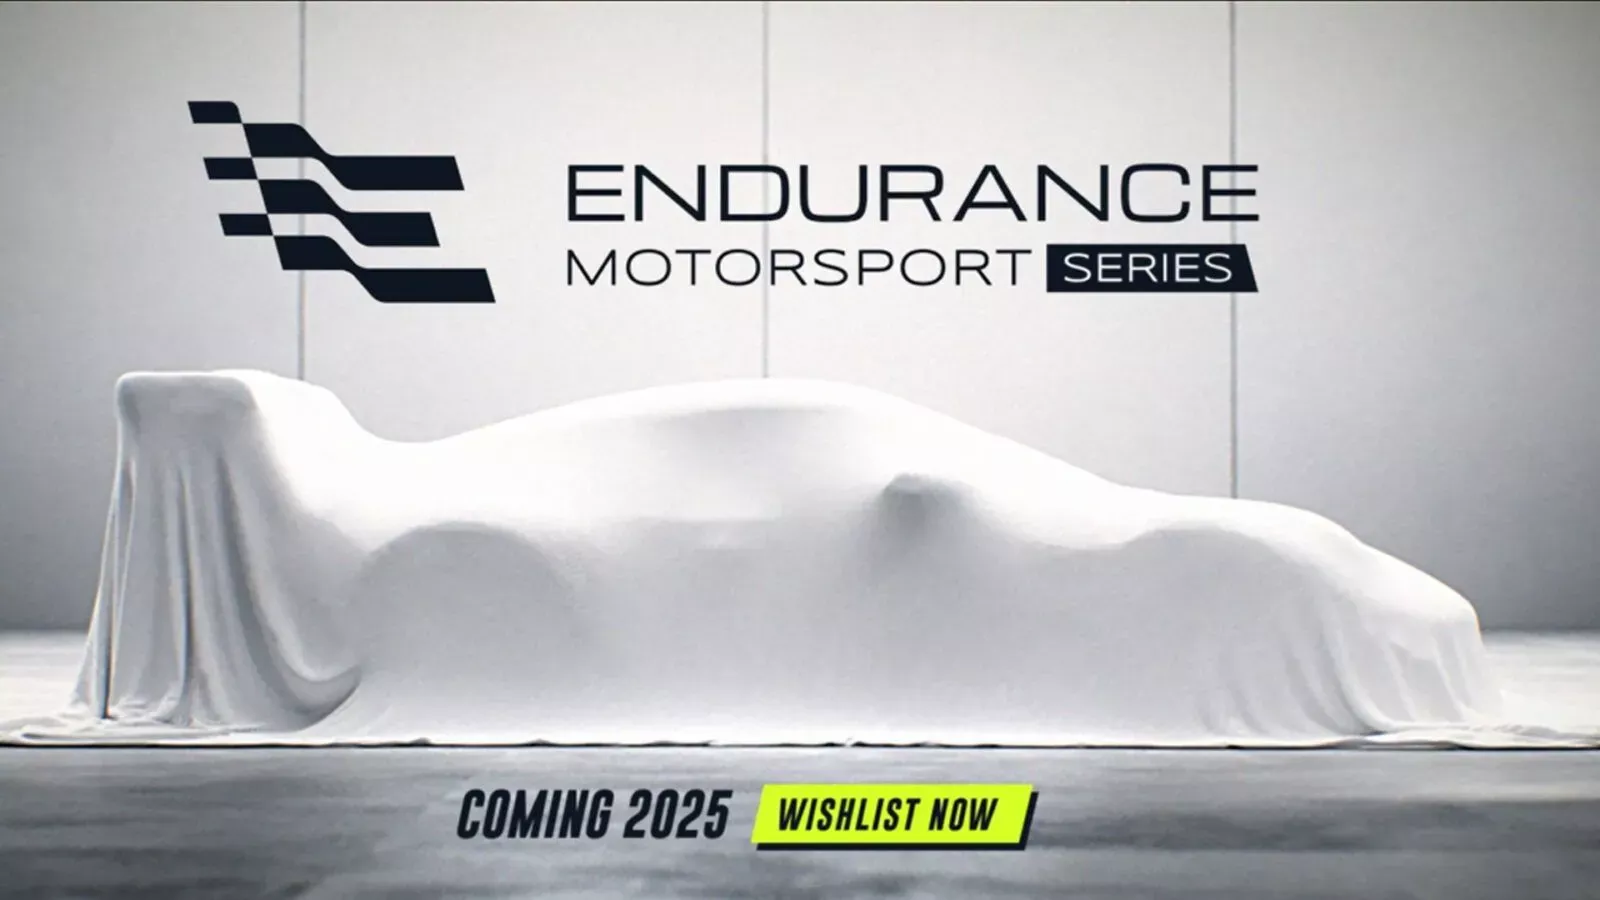 Endurance Motorsport Series für 2025 angekündigt Heropic